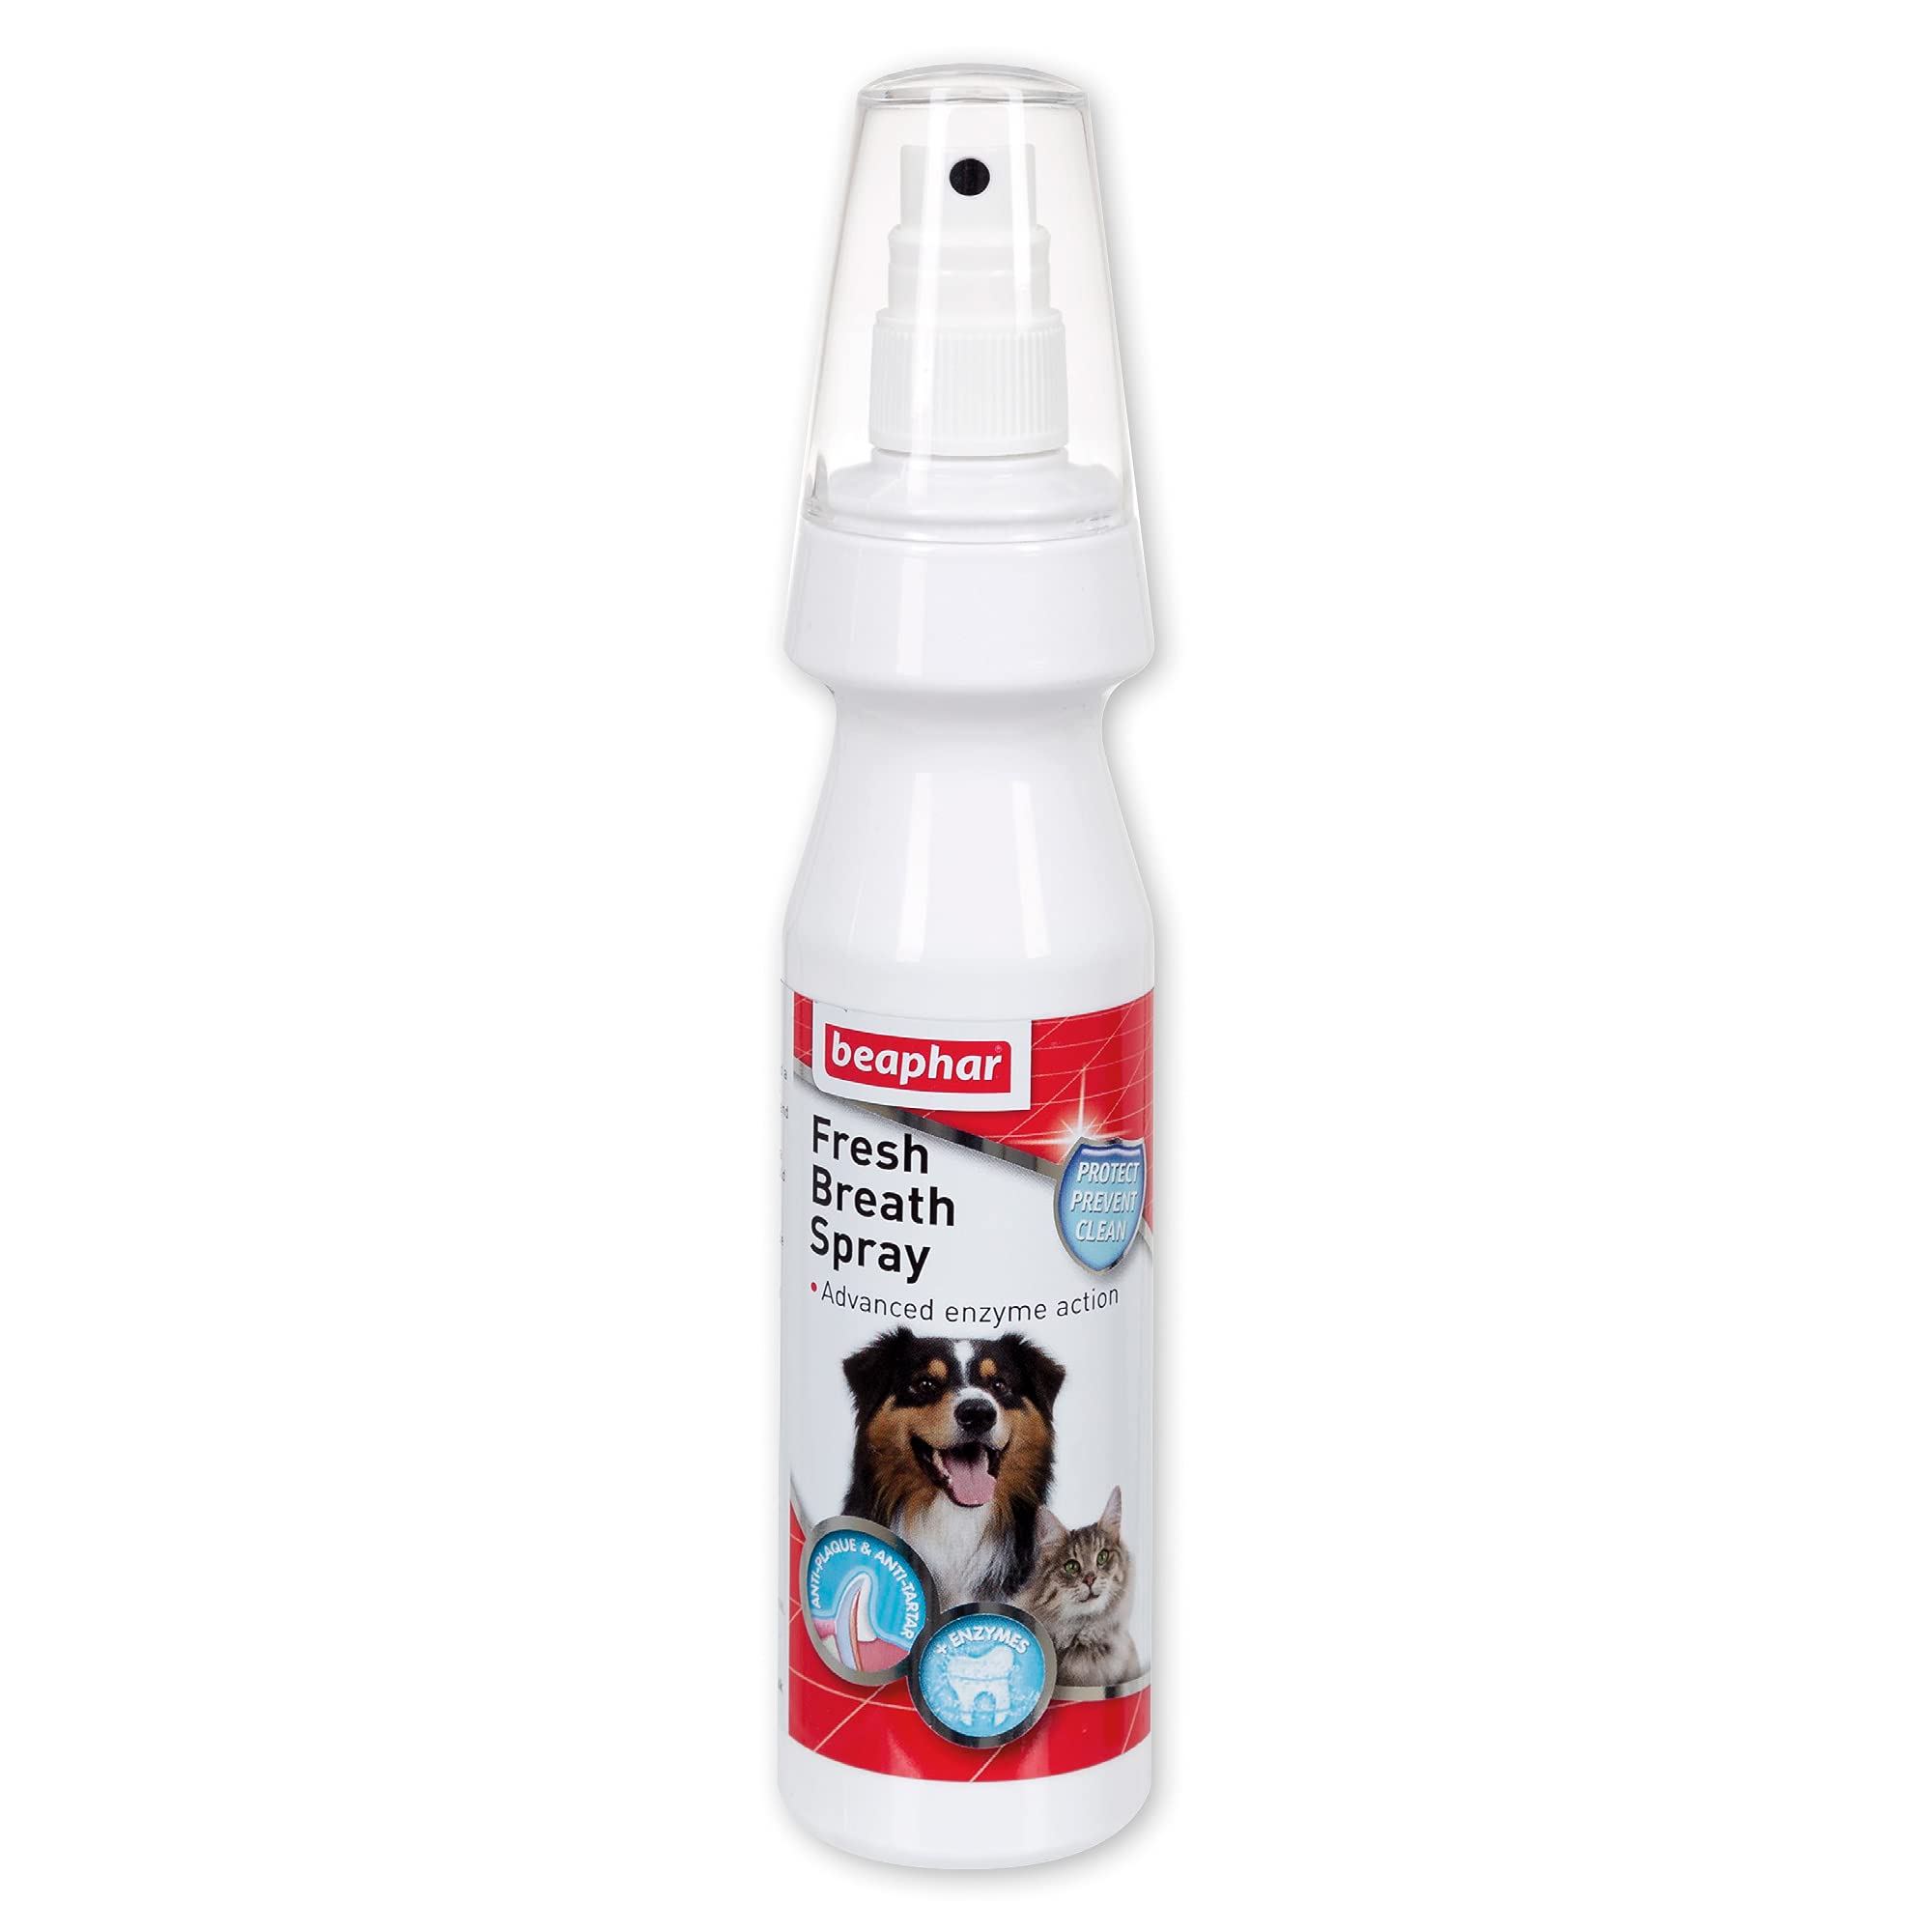 Beaphar Fresh Breath Spray, 150ml